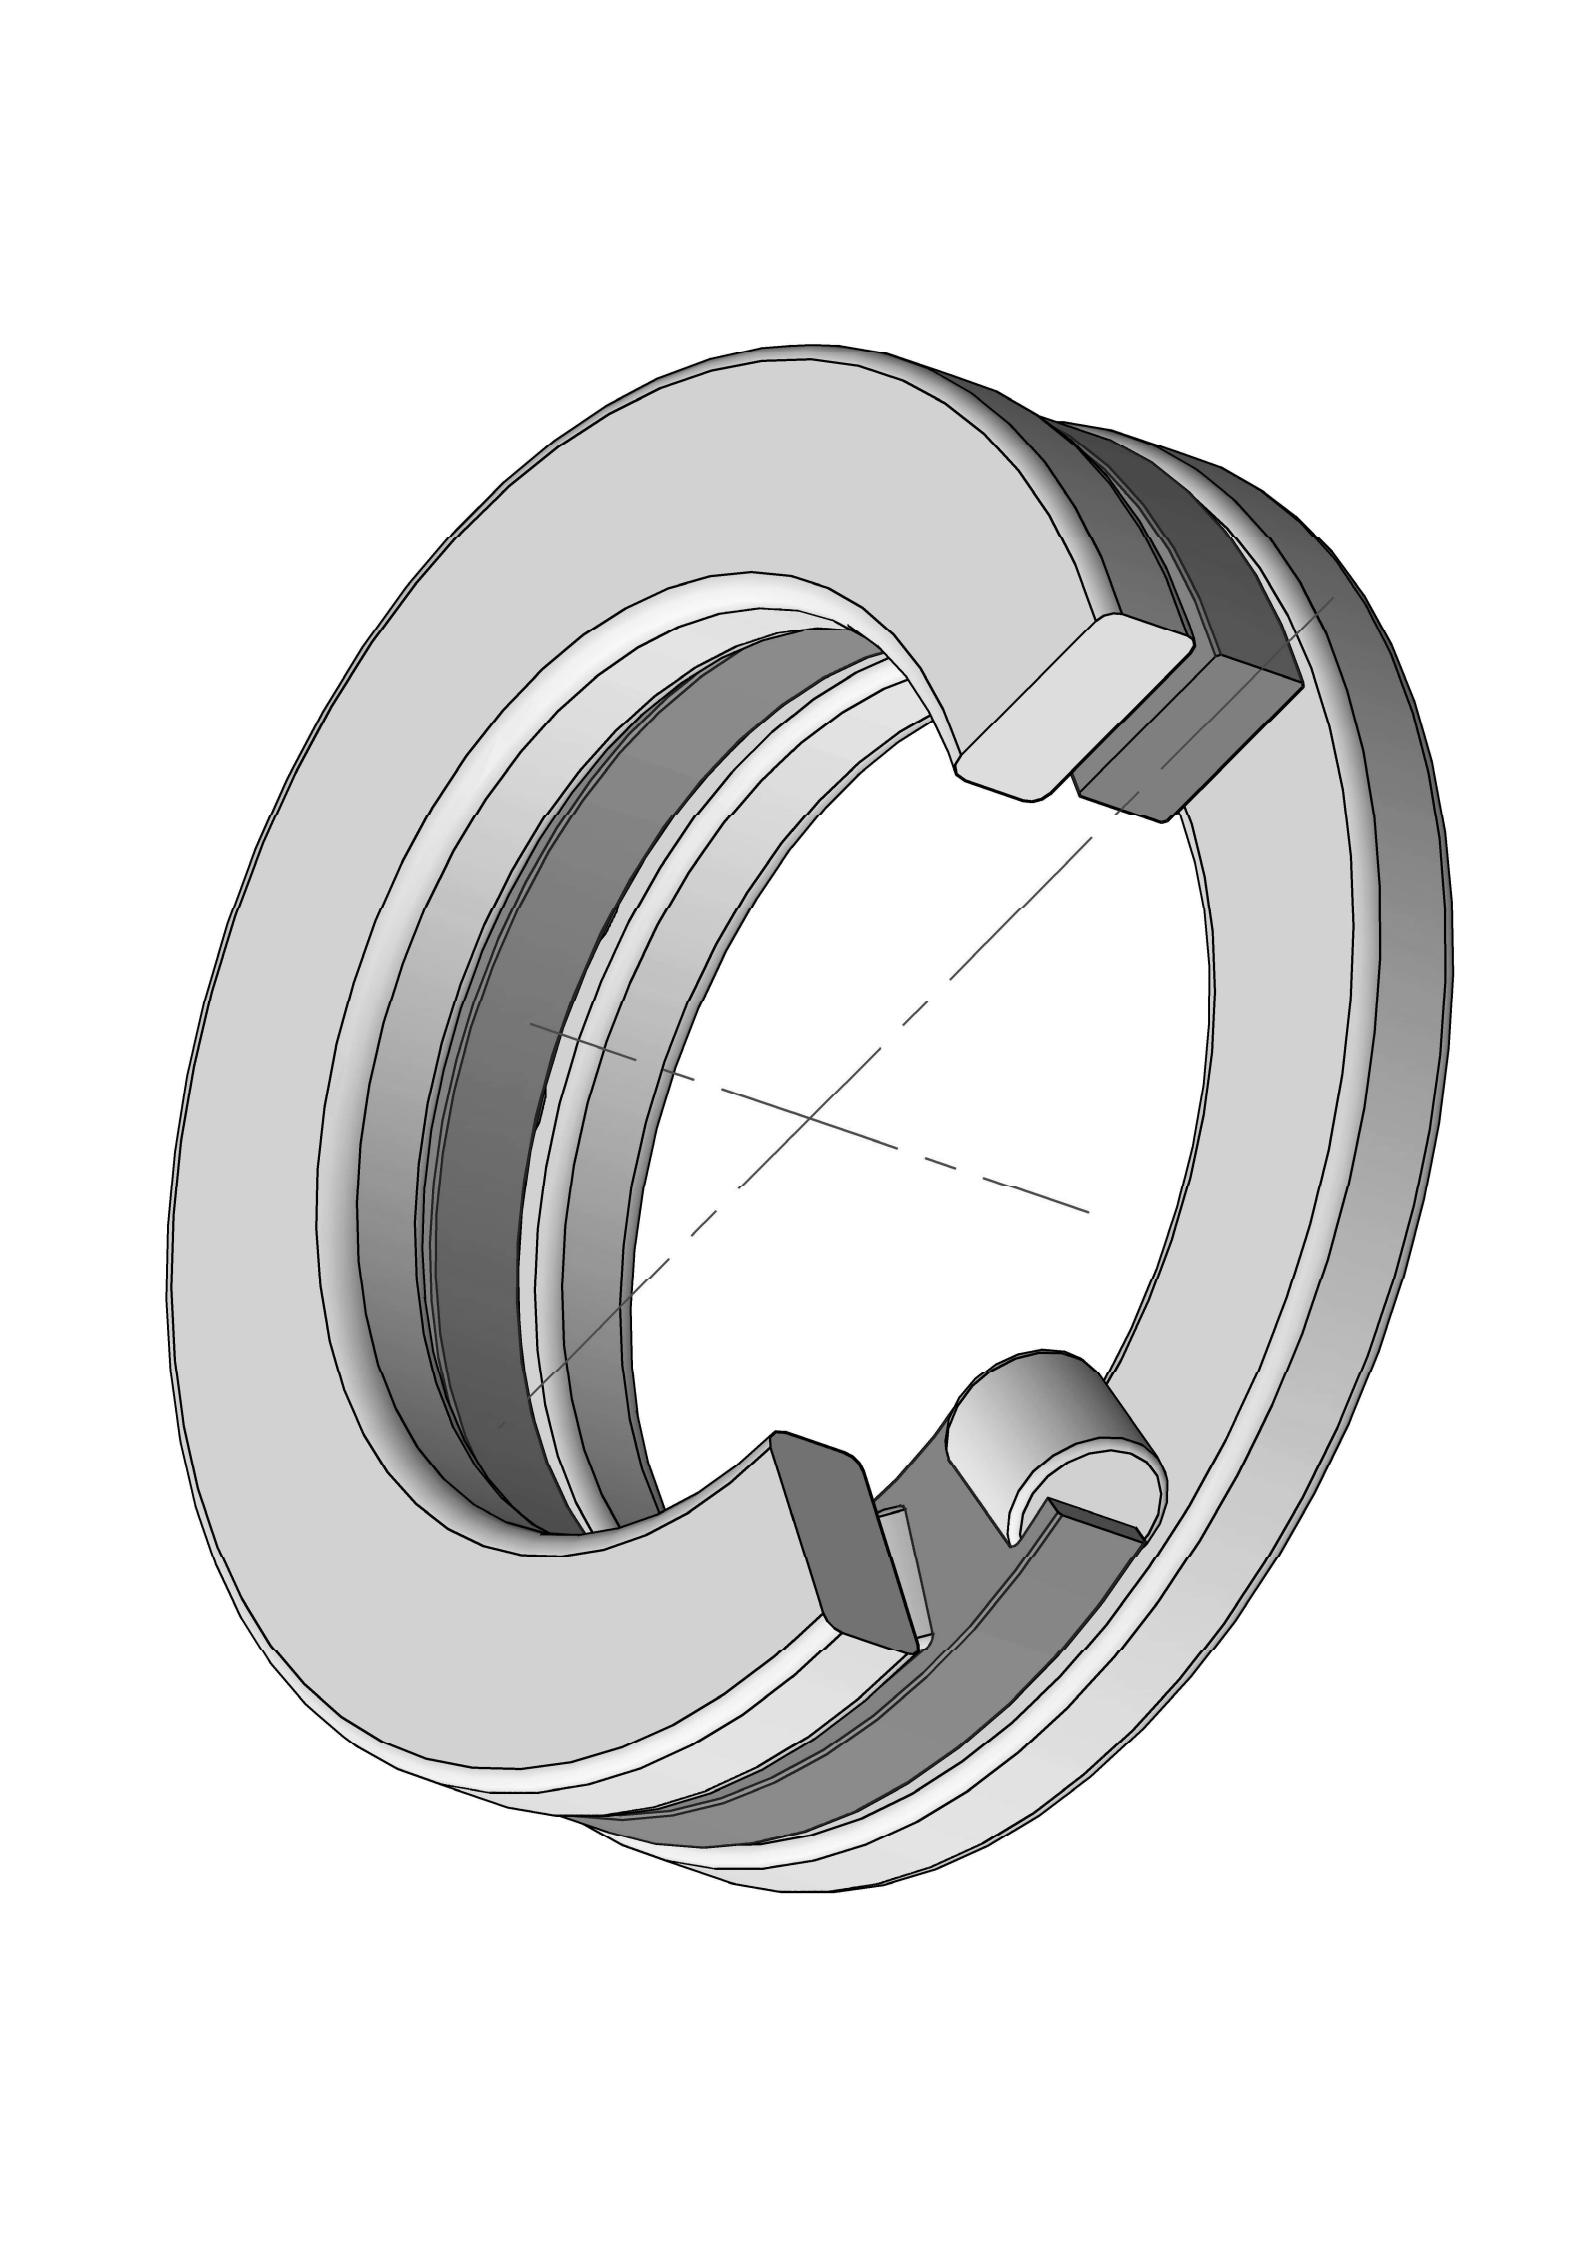 811/500 M Cylindrical roller thrust bearing